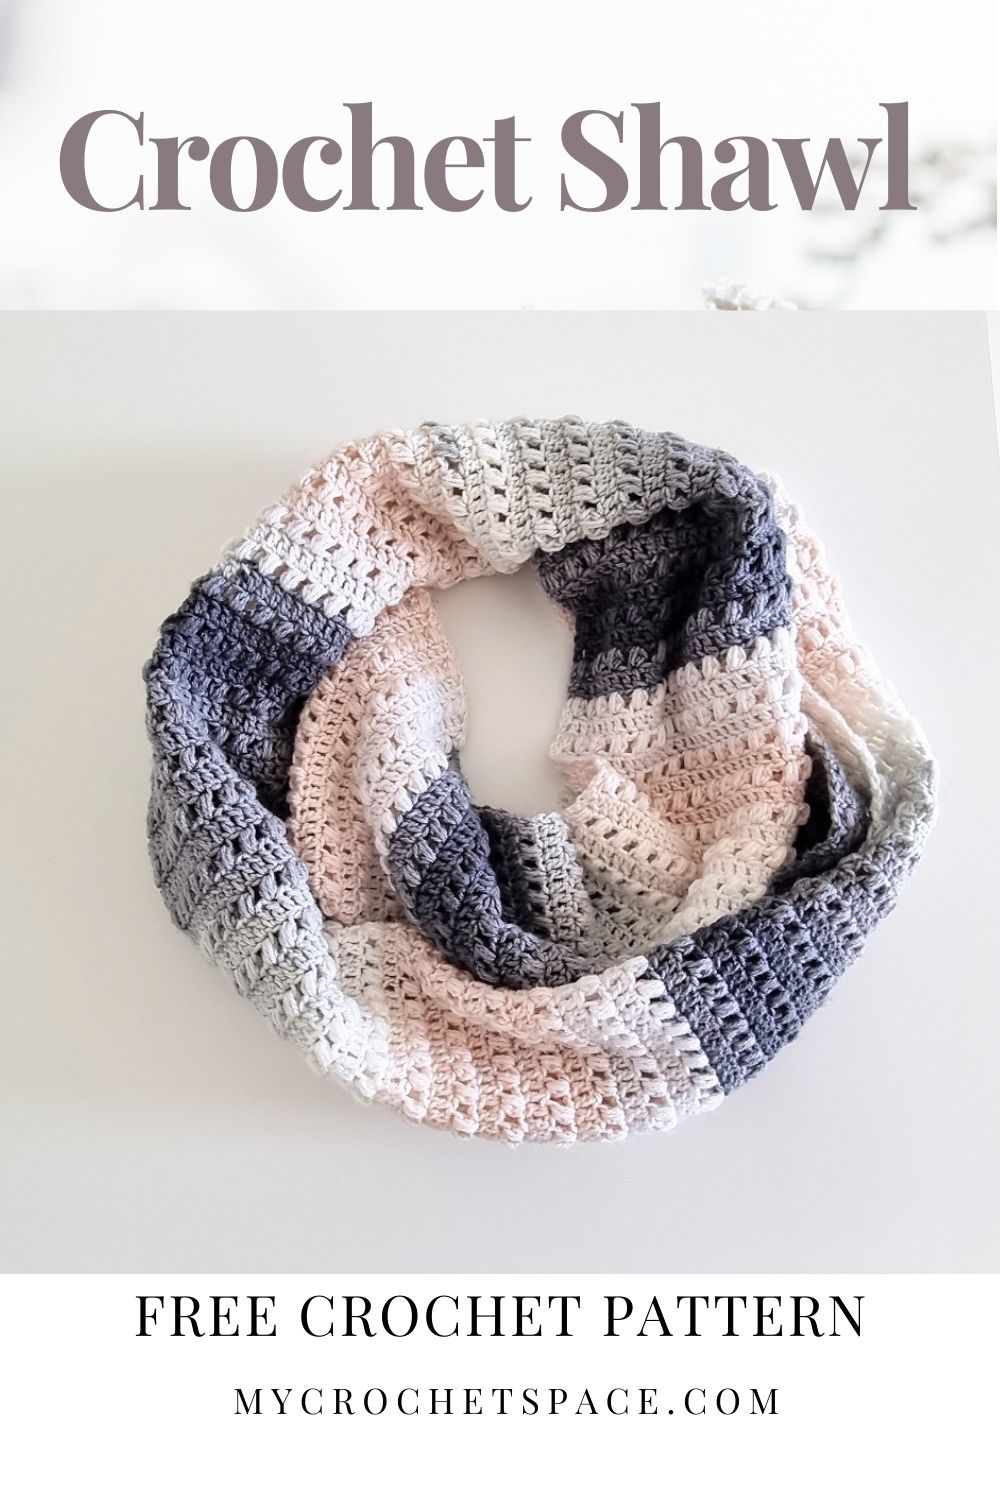 Easy Rectangular Crochet Shawl Pattern - Primavera Shawl - My Crochet Space